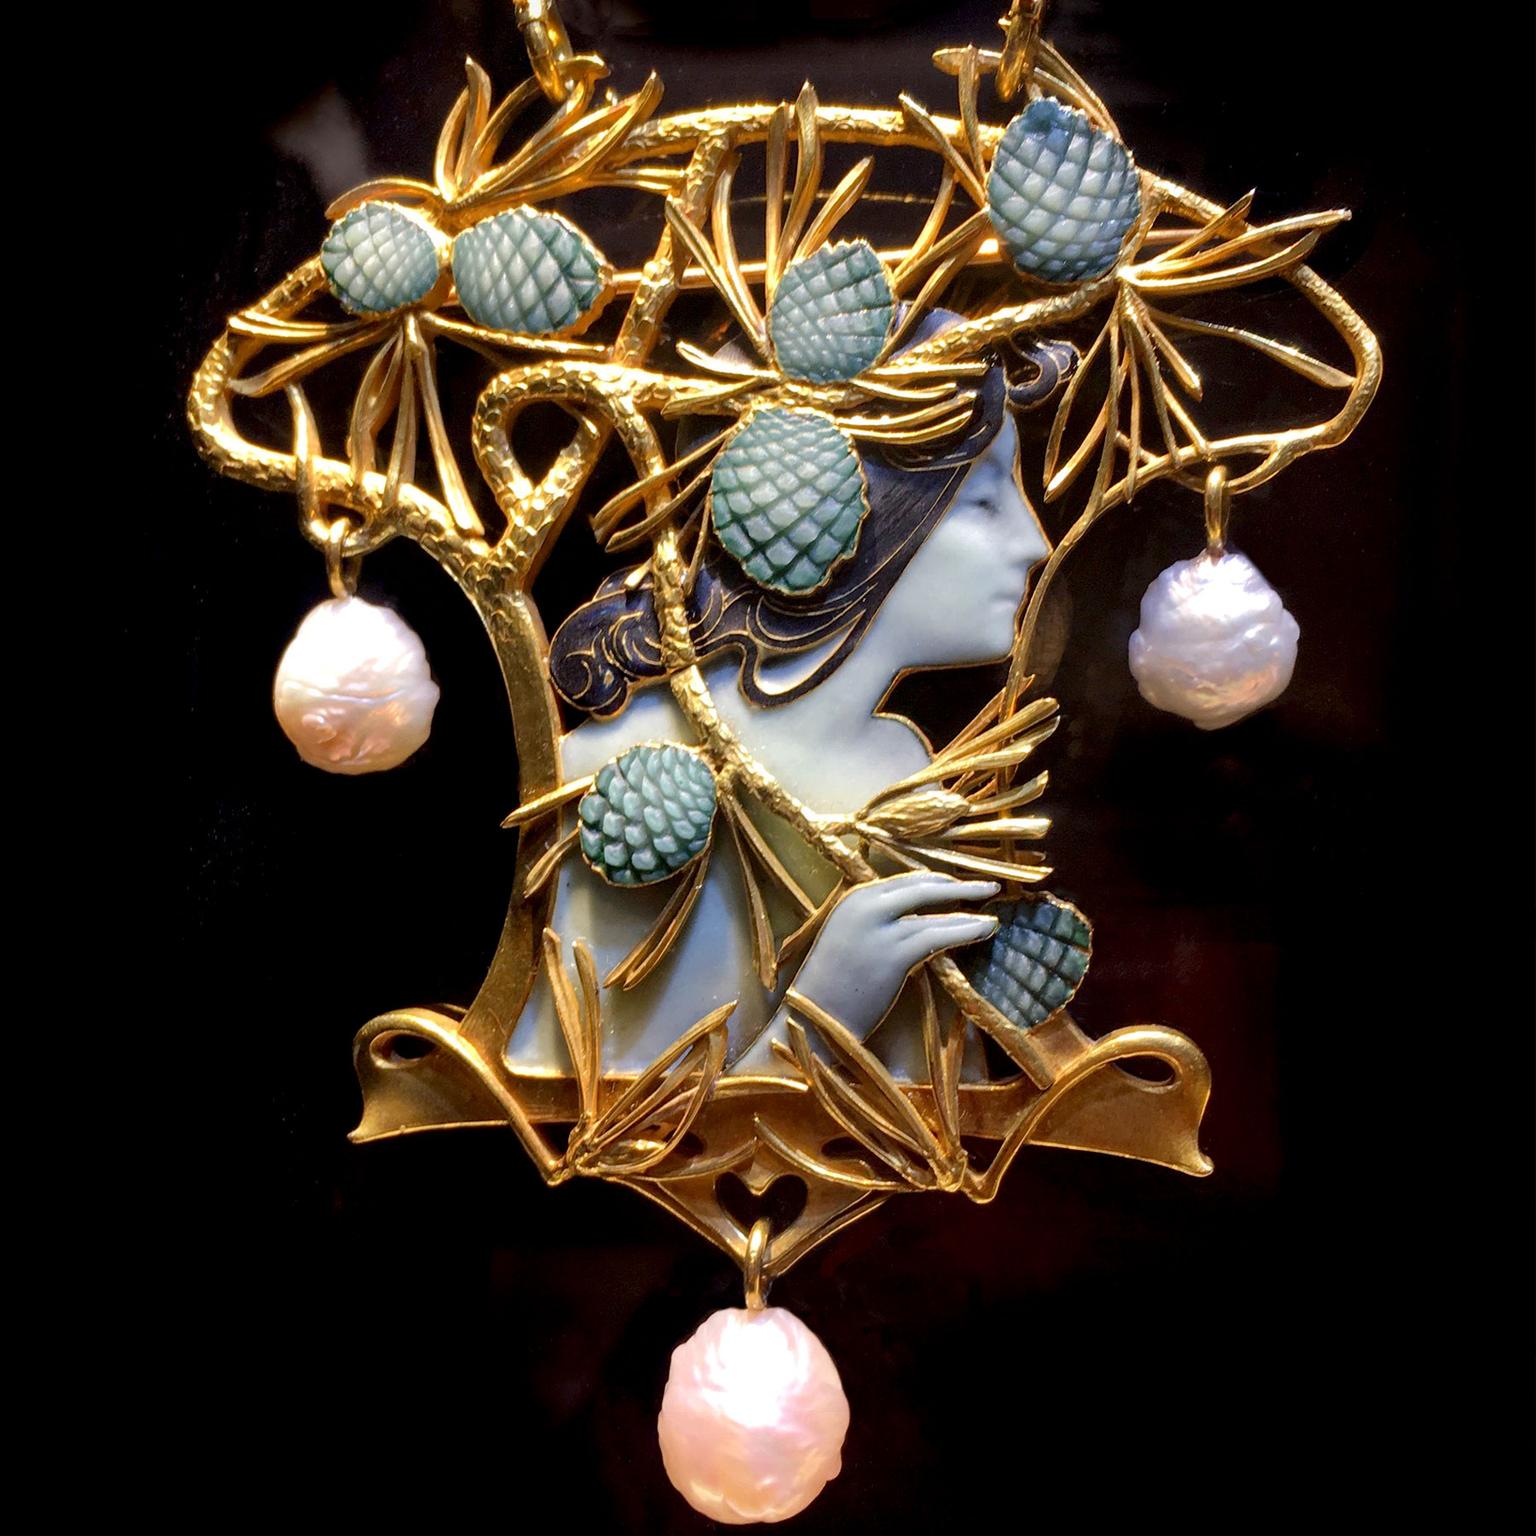 René Lalique pendant and brooch for sale at Wartski, seen at TEFAF 2017.